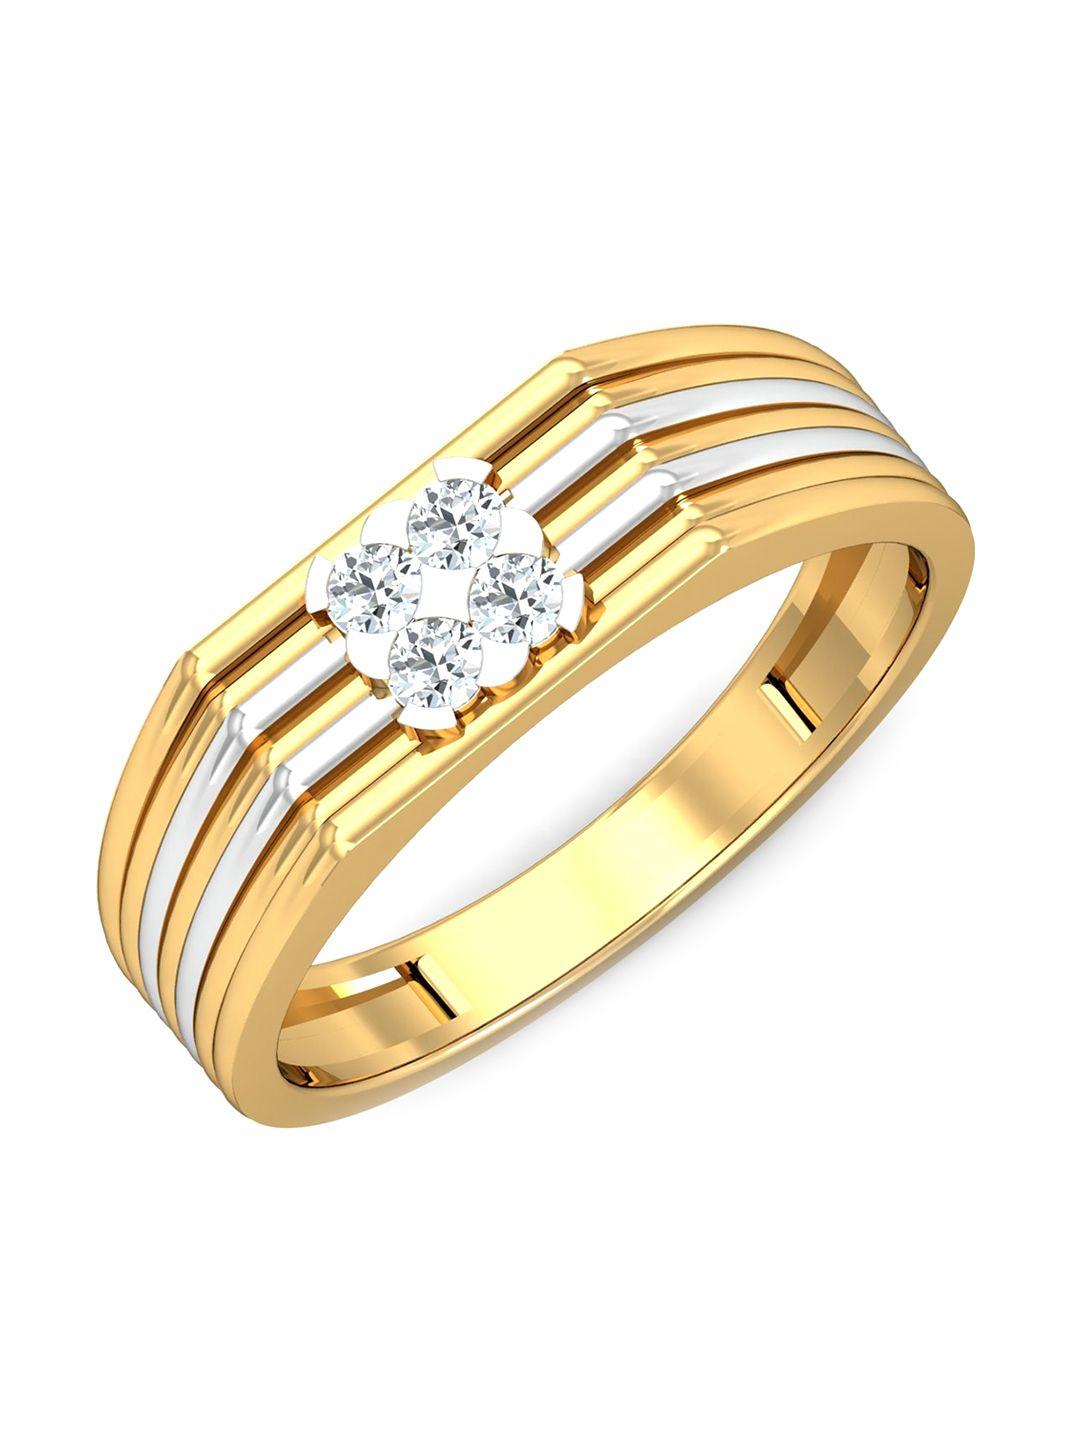 kuberbox 18kt gold diamond studded ring-2.56gm